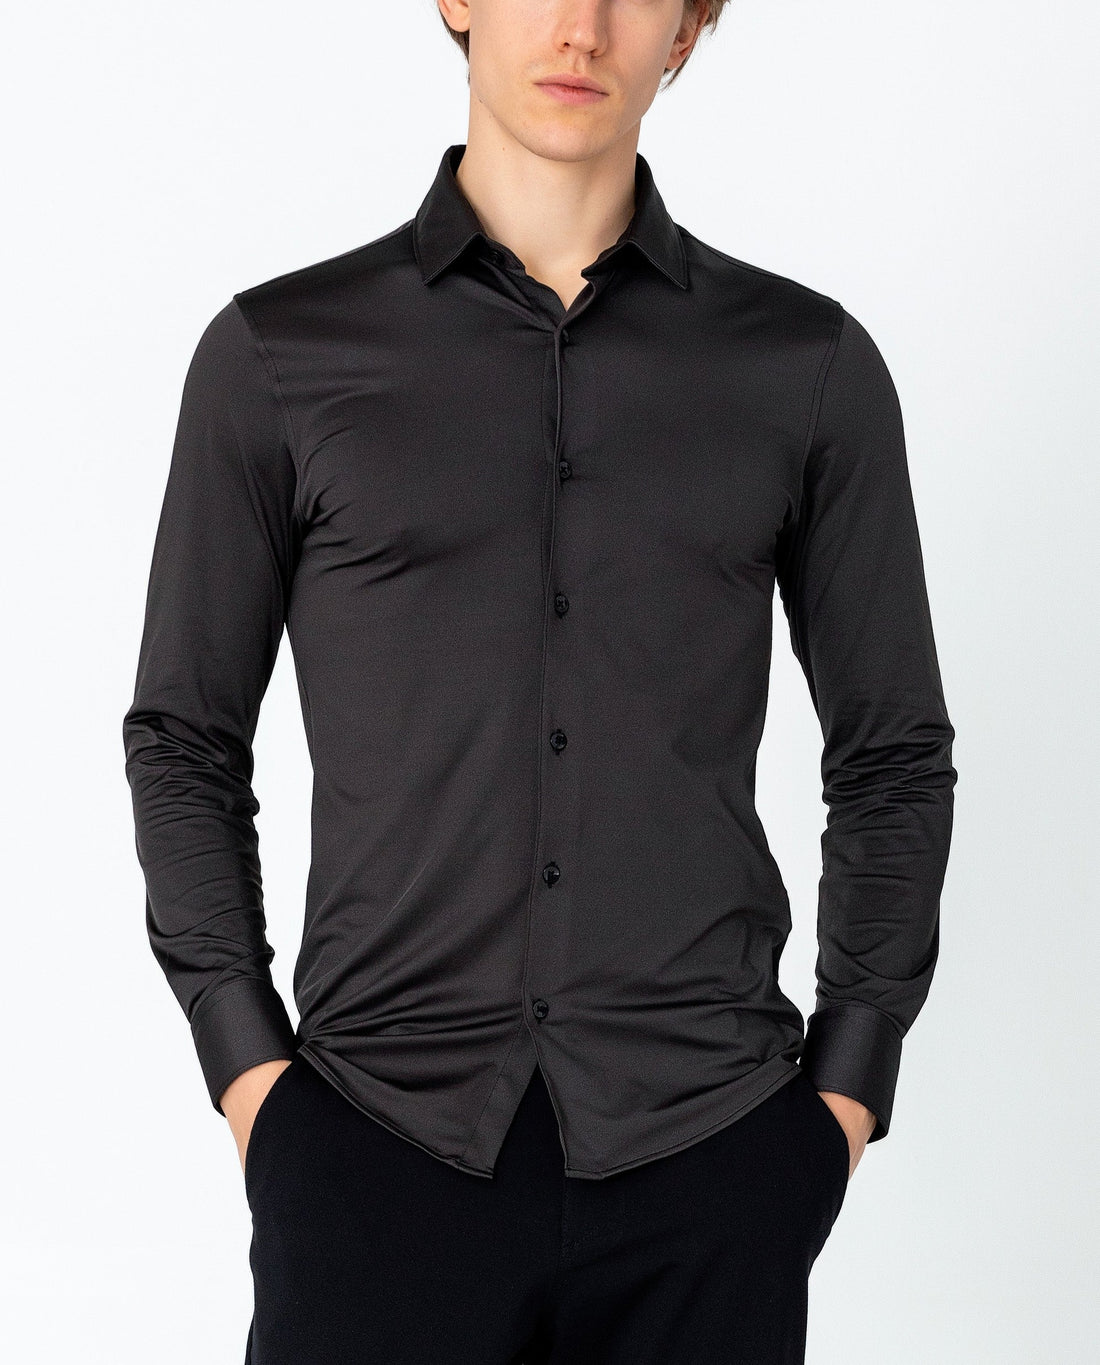 Wrinkle Free Athletic Dress Shirt - Black